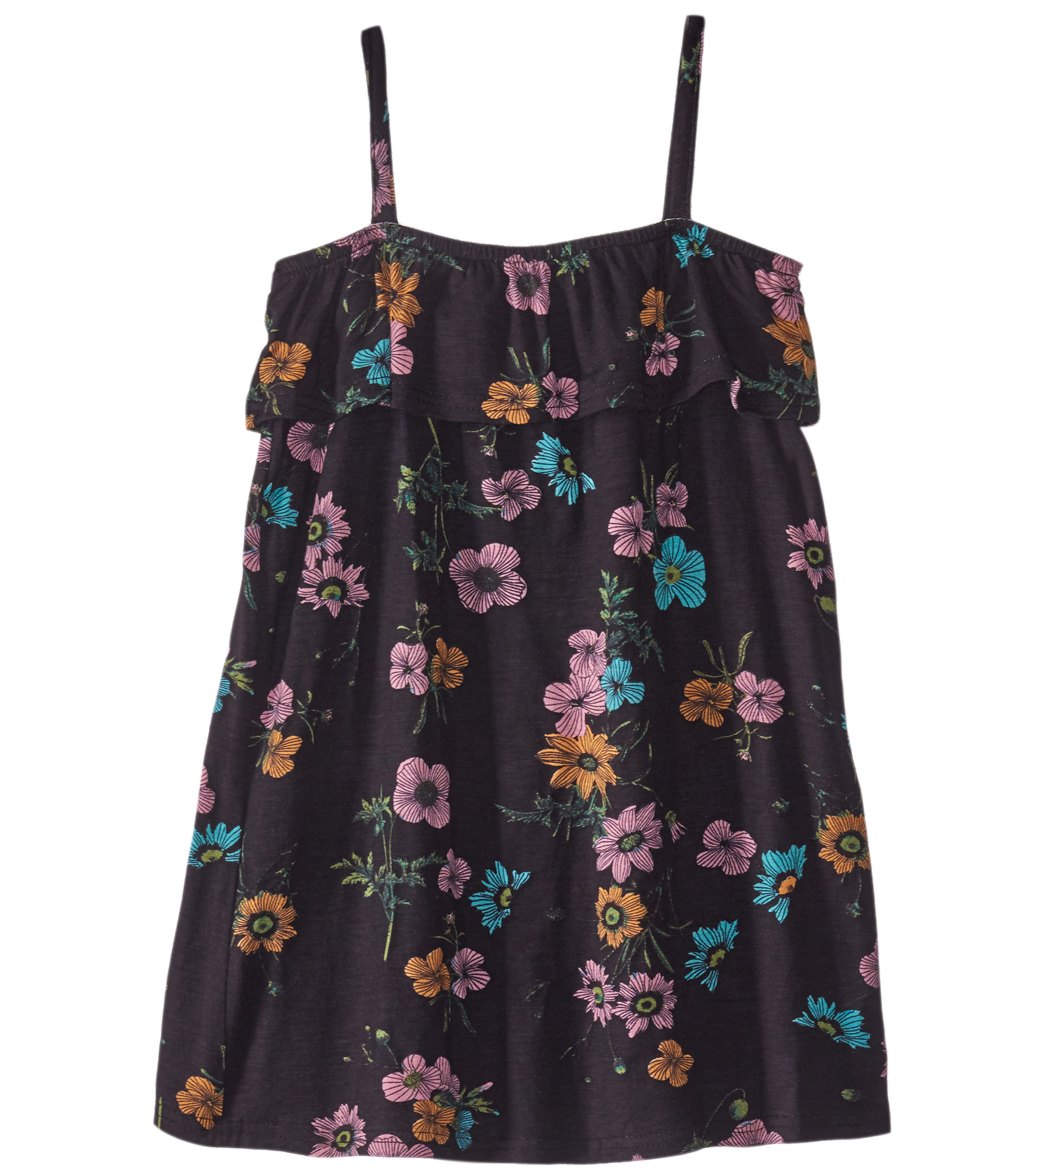 O'neill Girls' Knit Tank Dress Toddler - Black Large 6 - Swimoutlet.com